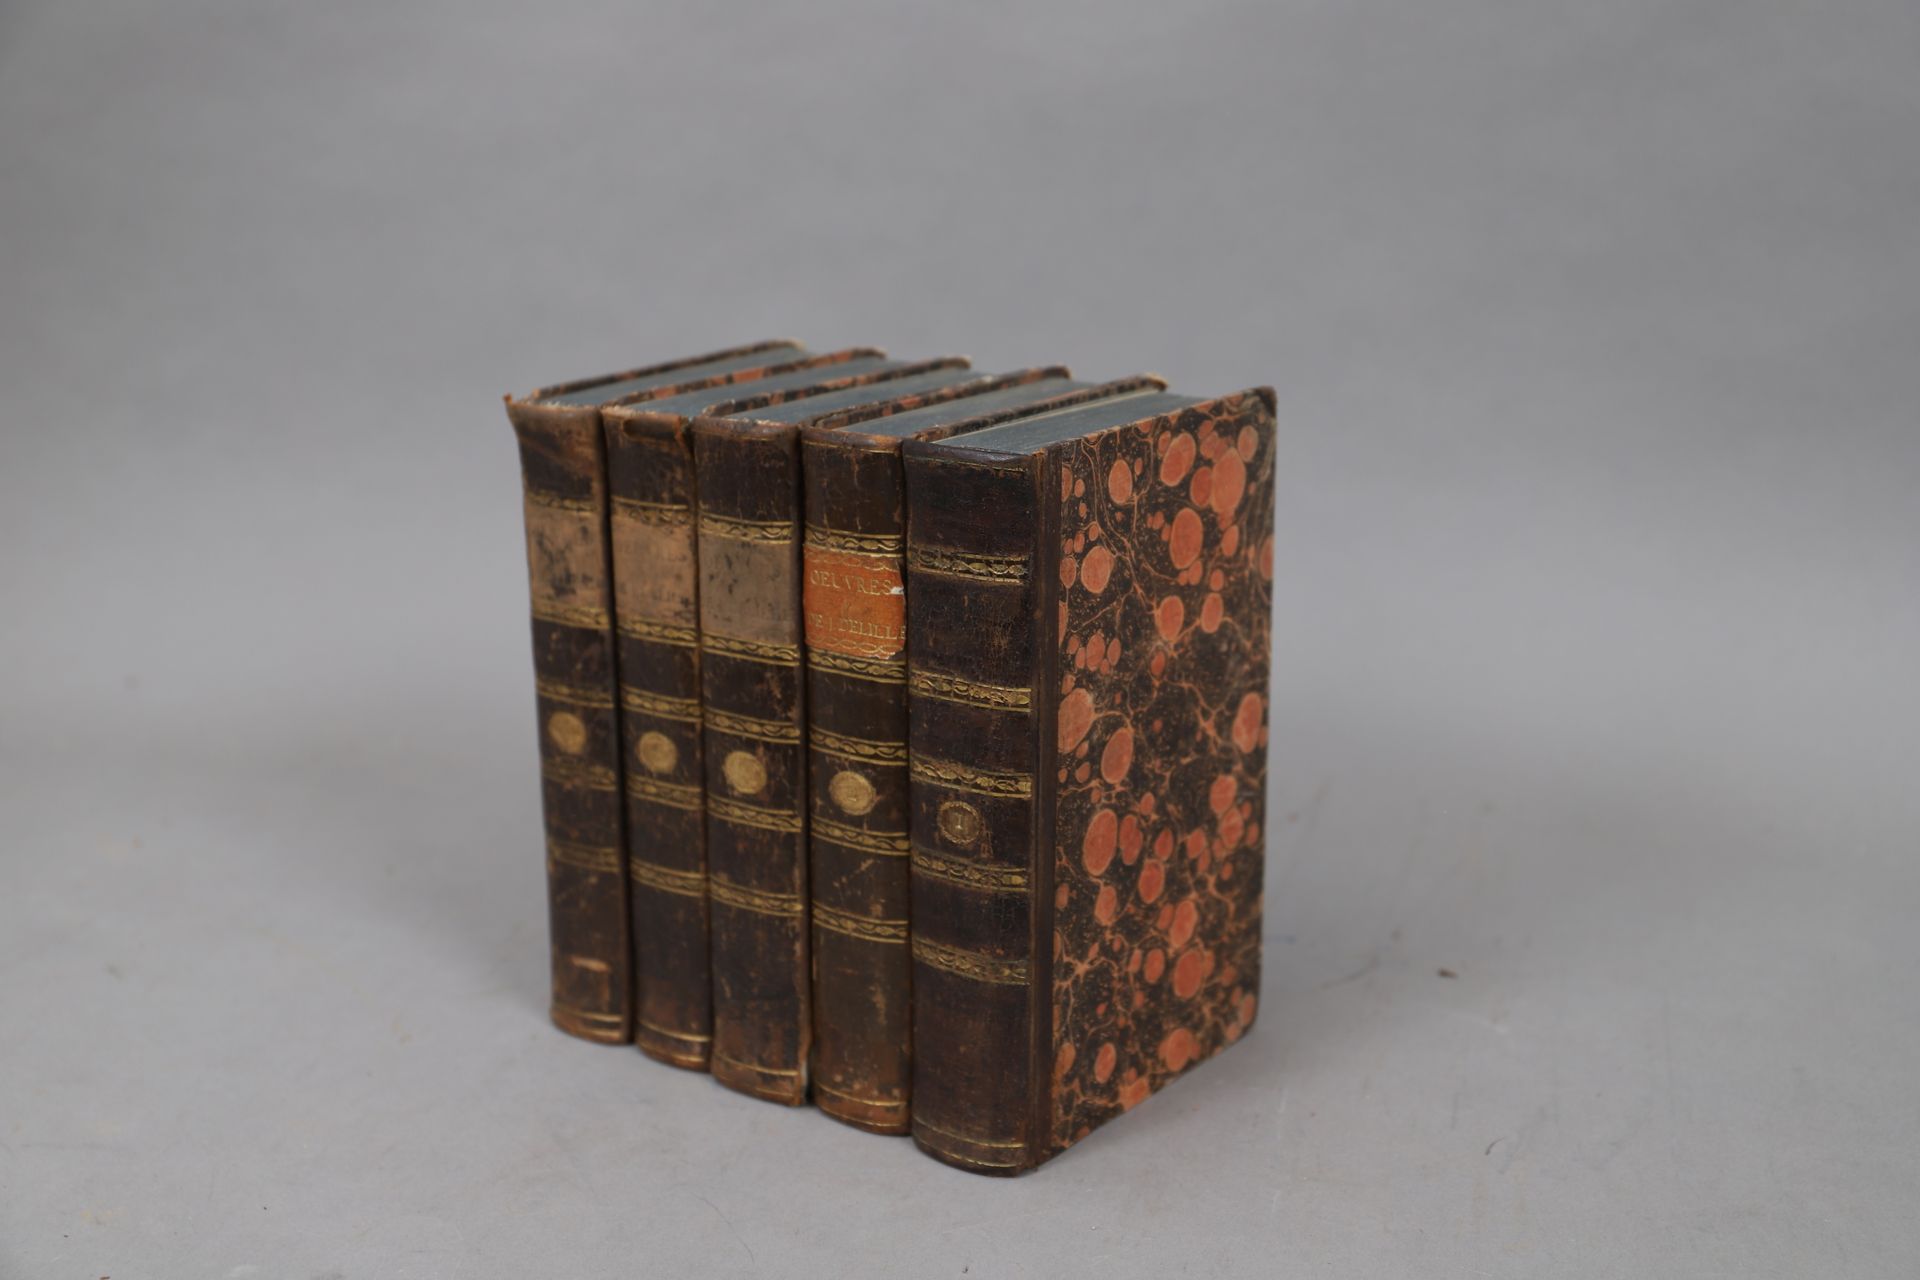 Null DELILLE的作品

布鲁塞尔 1817年

5册合订本。